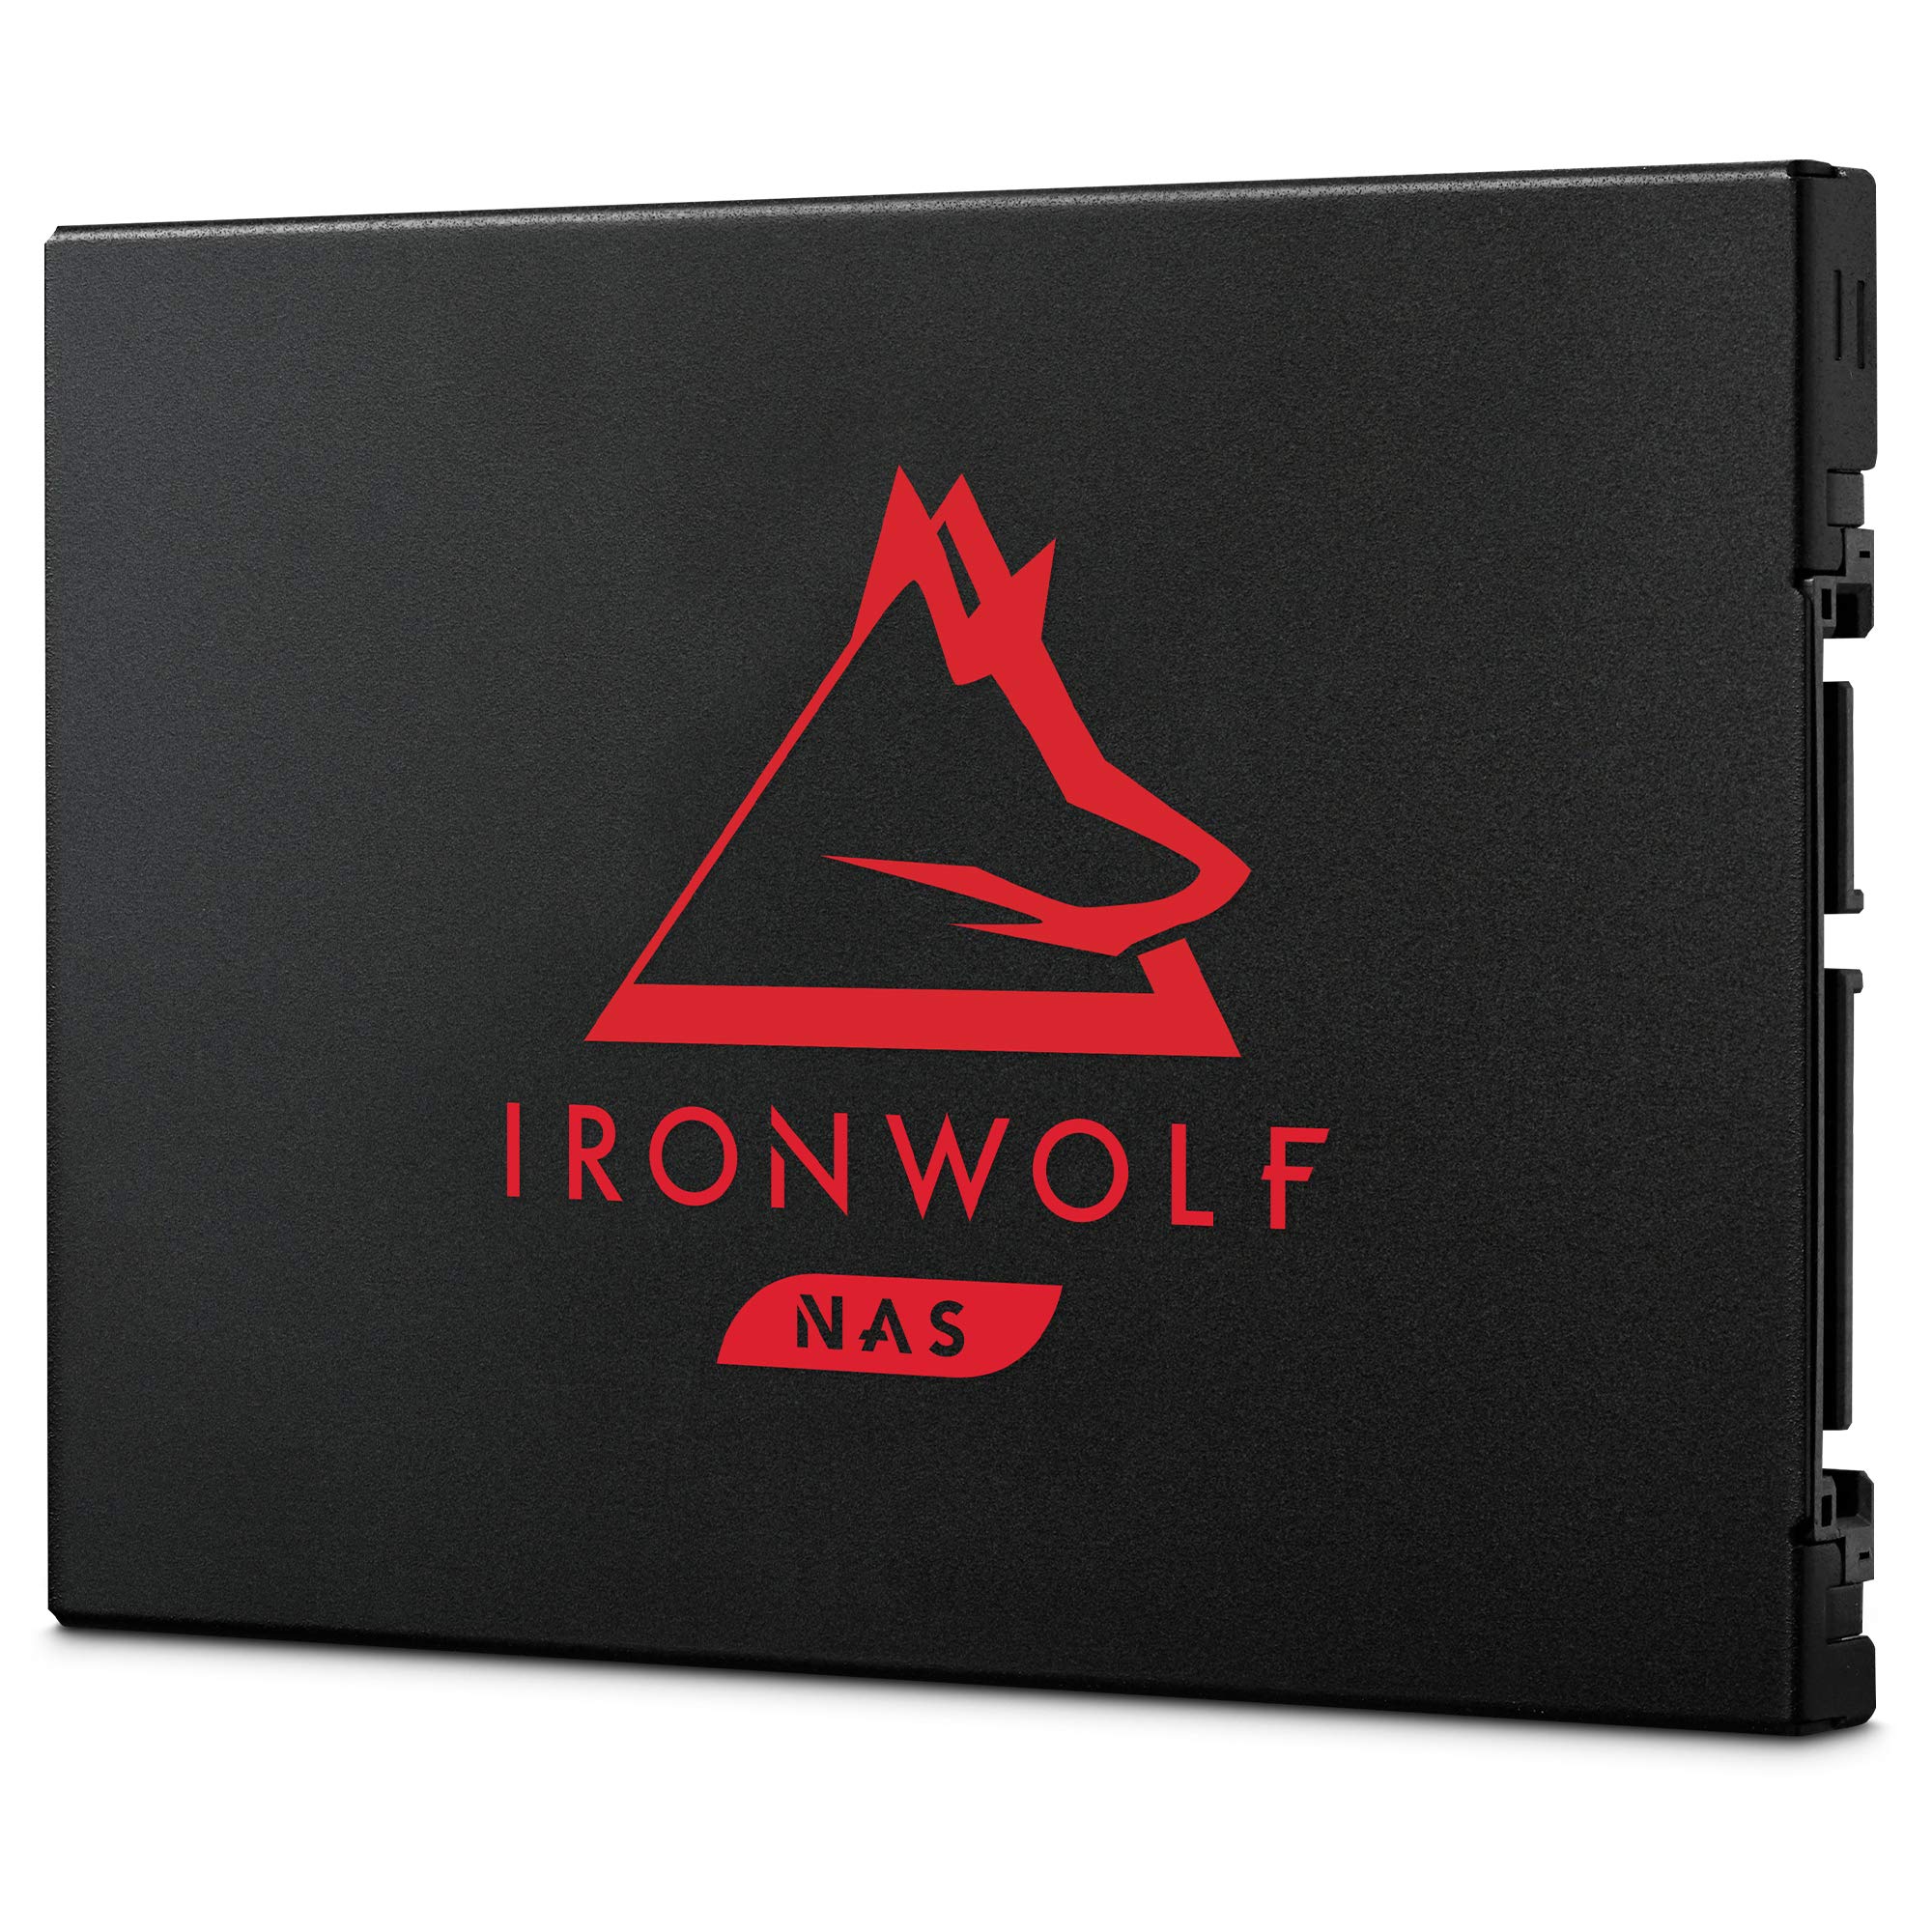 Seagate IronWolf 125 SSD 250GB NAS 内蔵ソリッドステートドライブ - 2.5インチ SATA 6Gbs 最大560MB秒 24x7